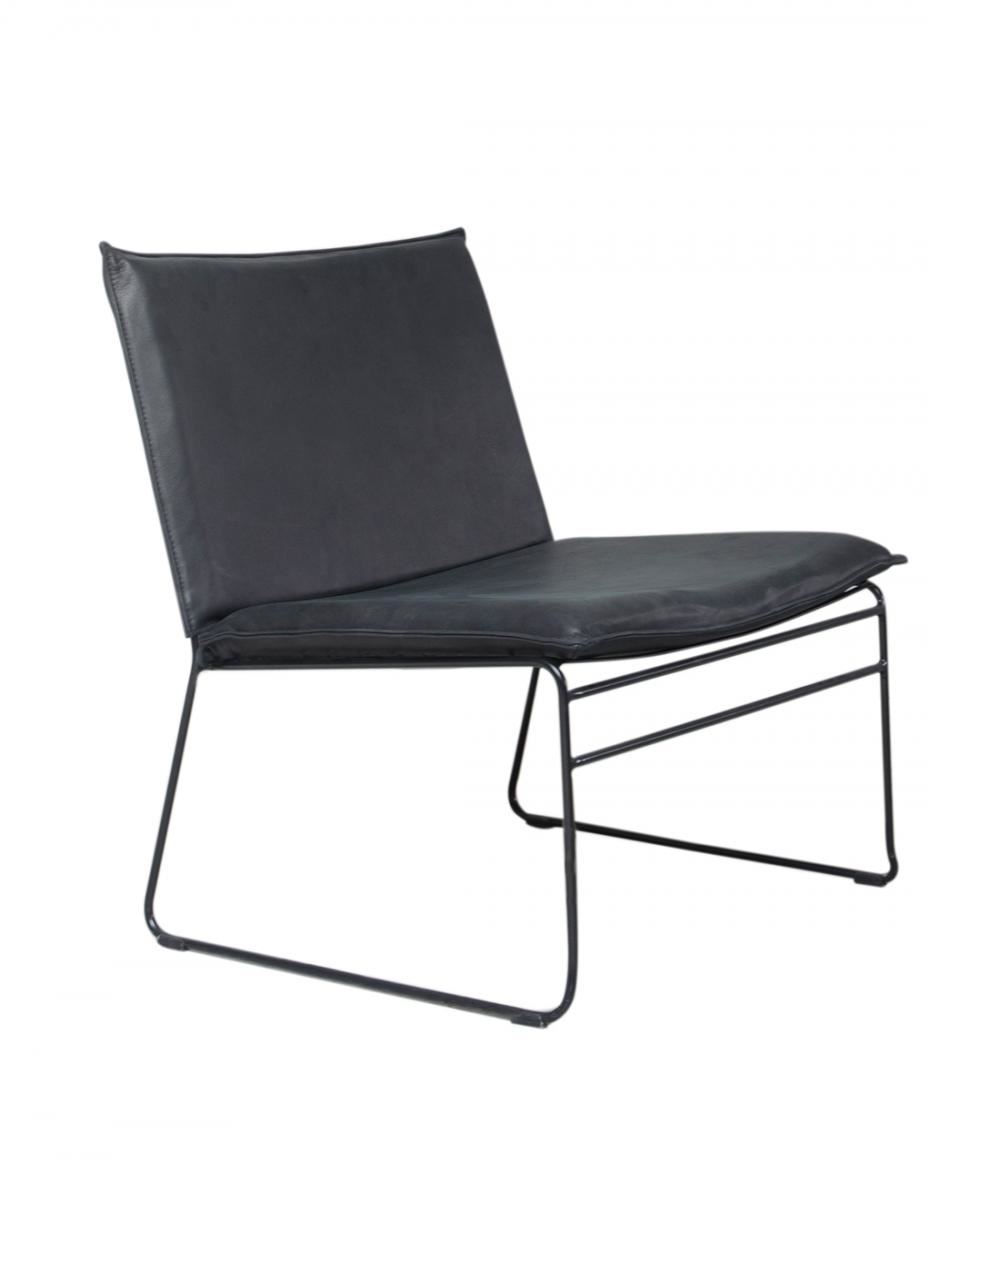 Kyst Lounge Chair Outdoor Lounge Chair With Black Cushion Ottoman Light Grey Cushion